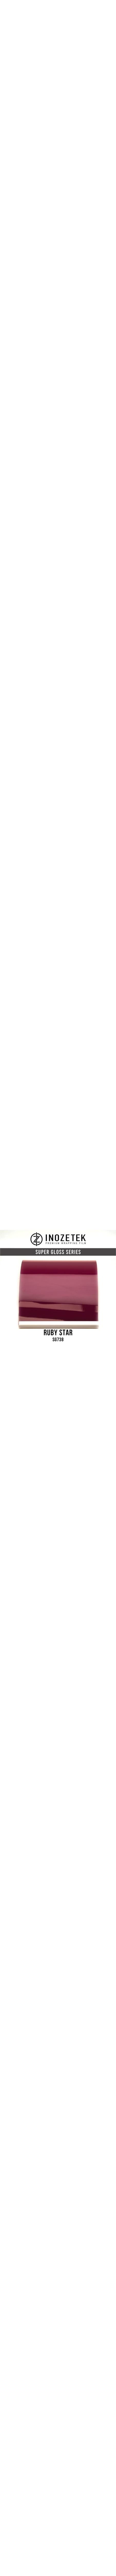 SG738 Super gloss ruby star Inozetek en 1.52m